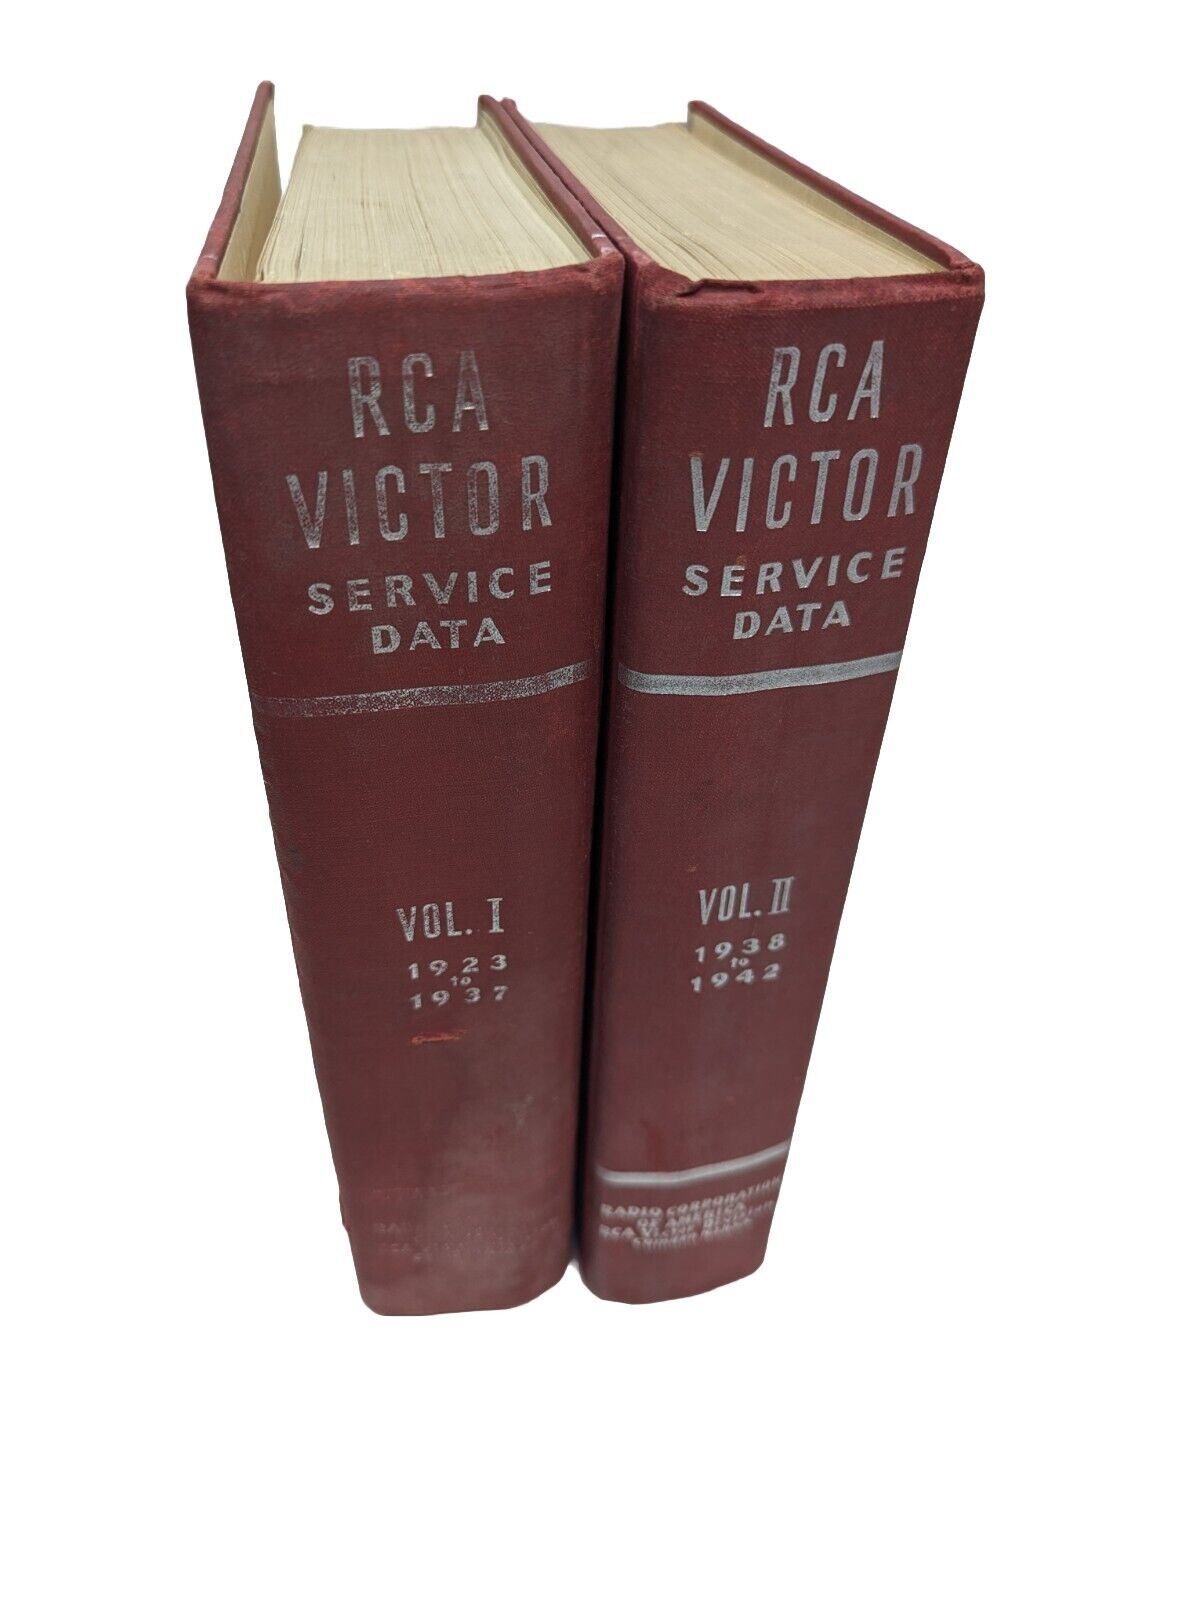 RCA Victor Service Data Vols I &II Hardbound Abridged Radio Red Book 1923-1942